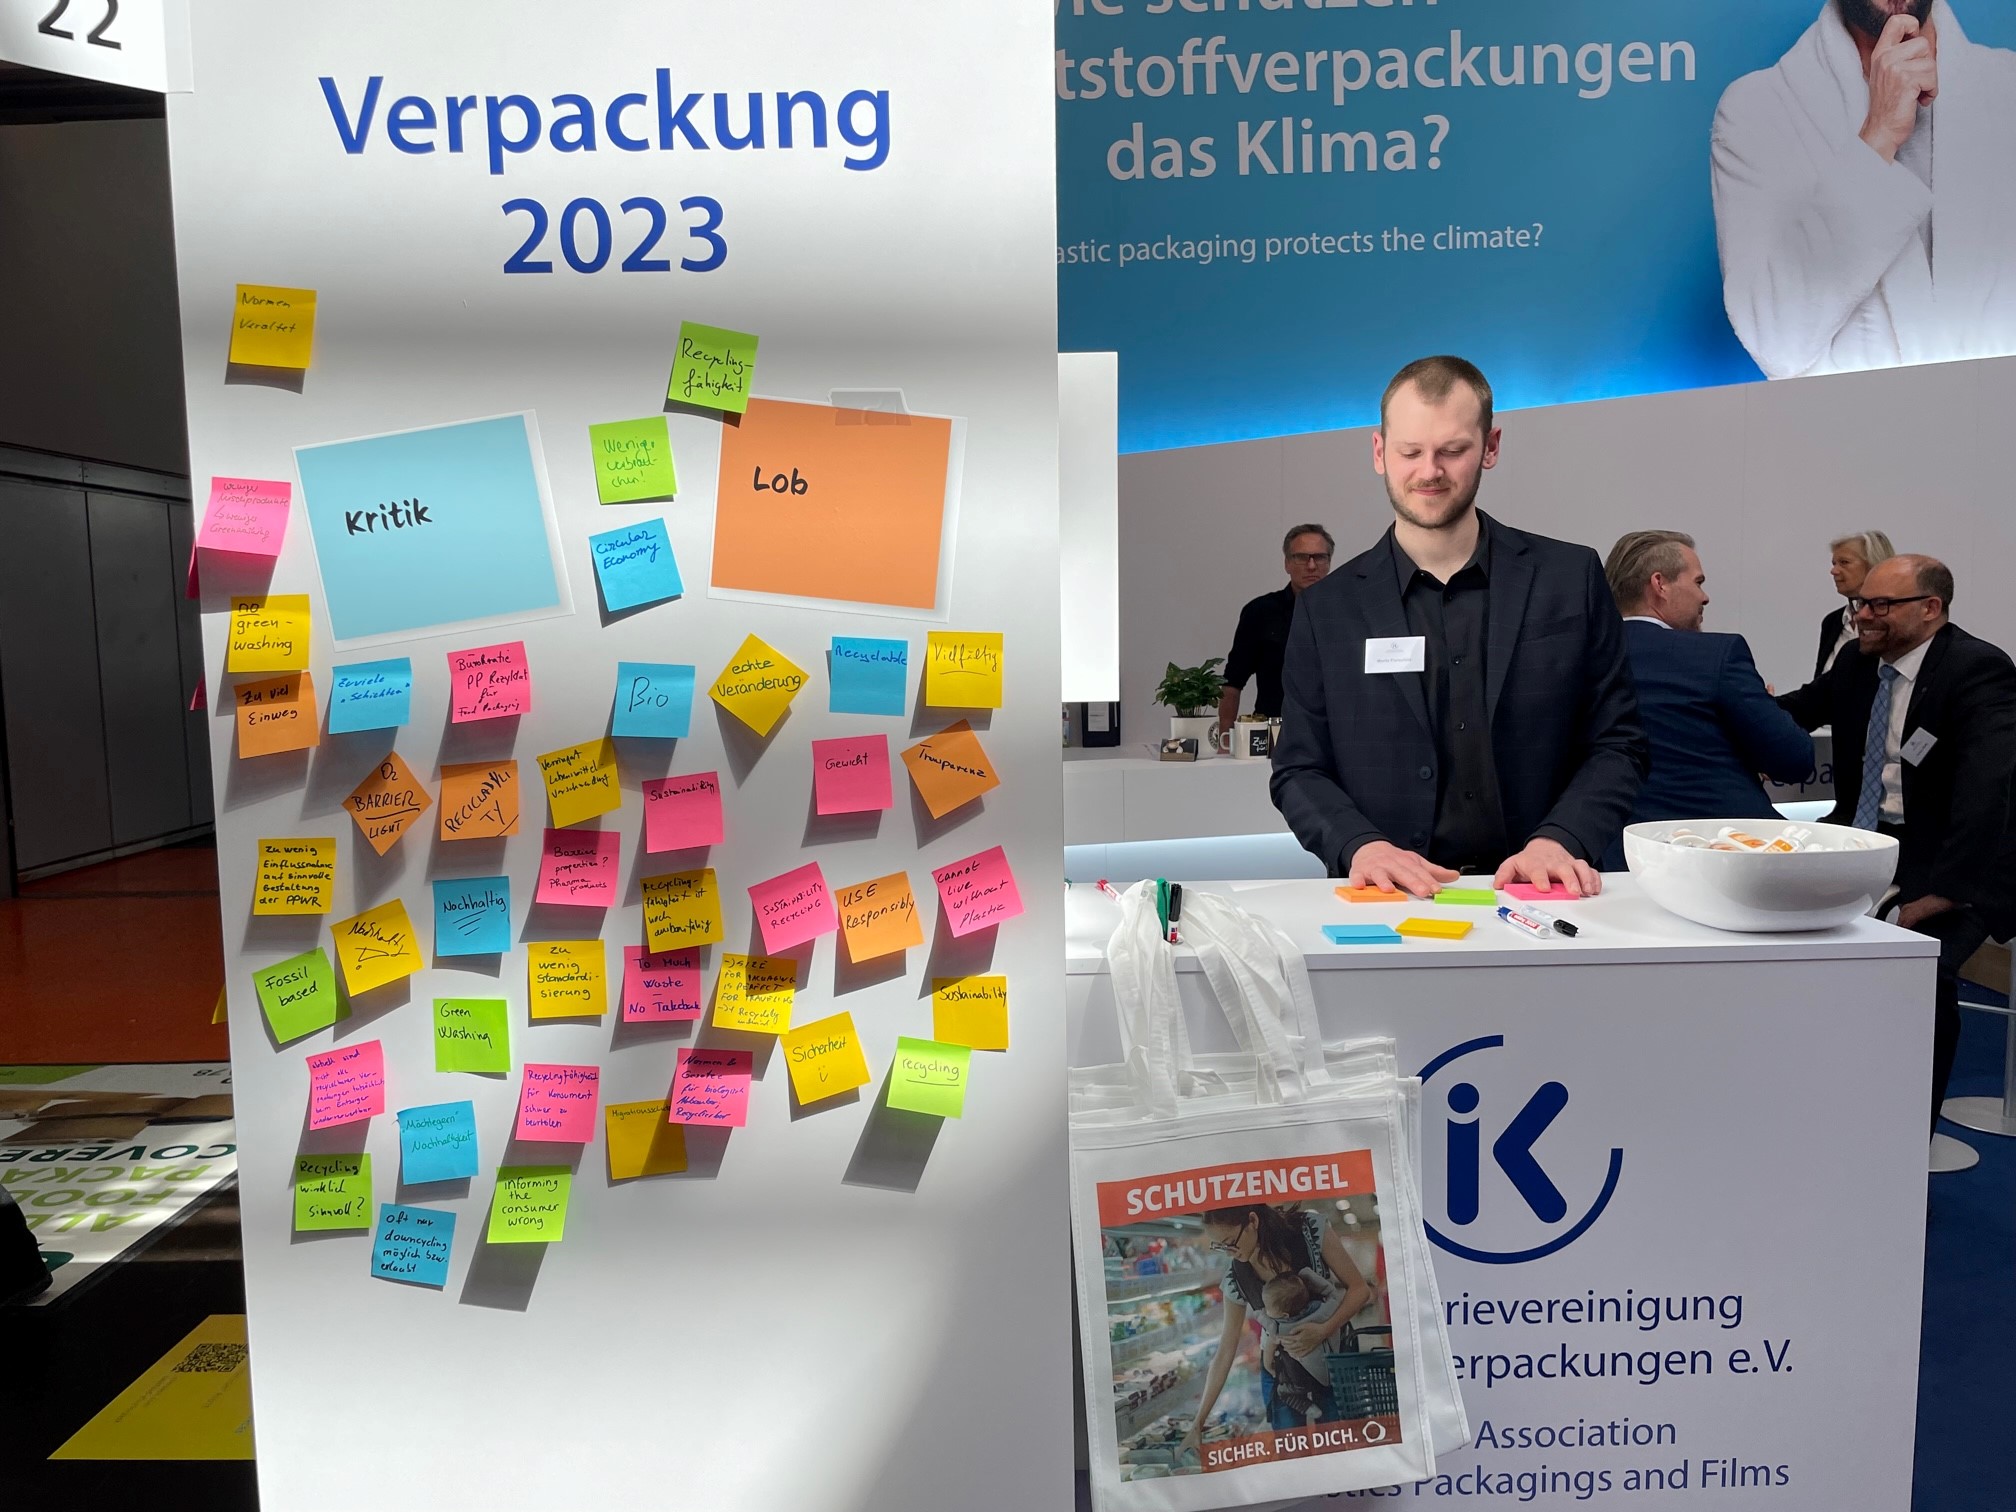 Industrievereinigung Kunststoffverpackungen iK at the interpack 2023